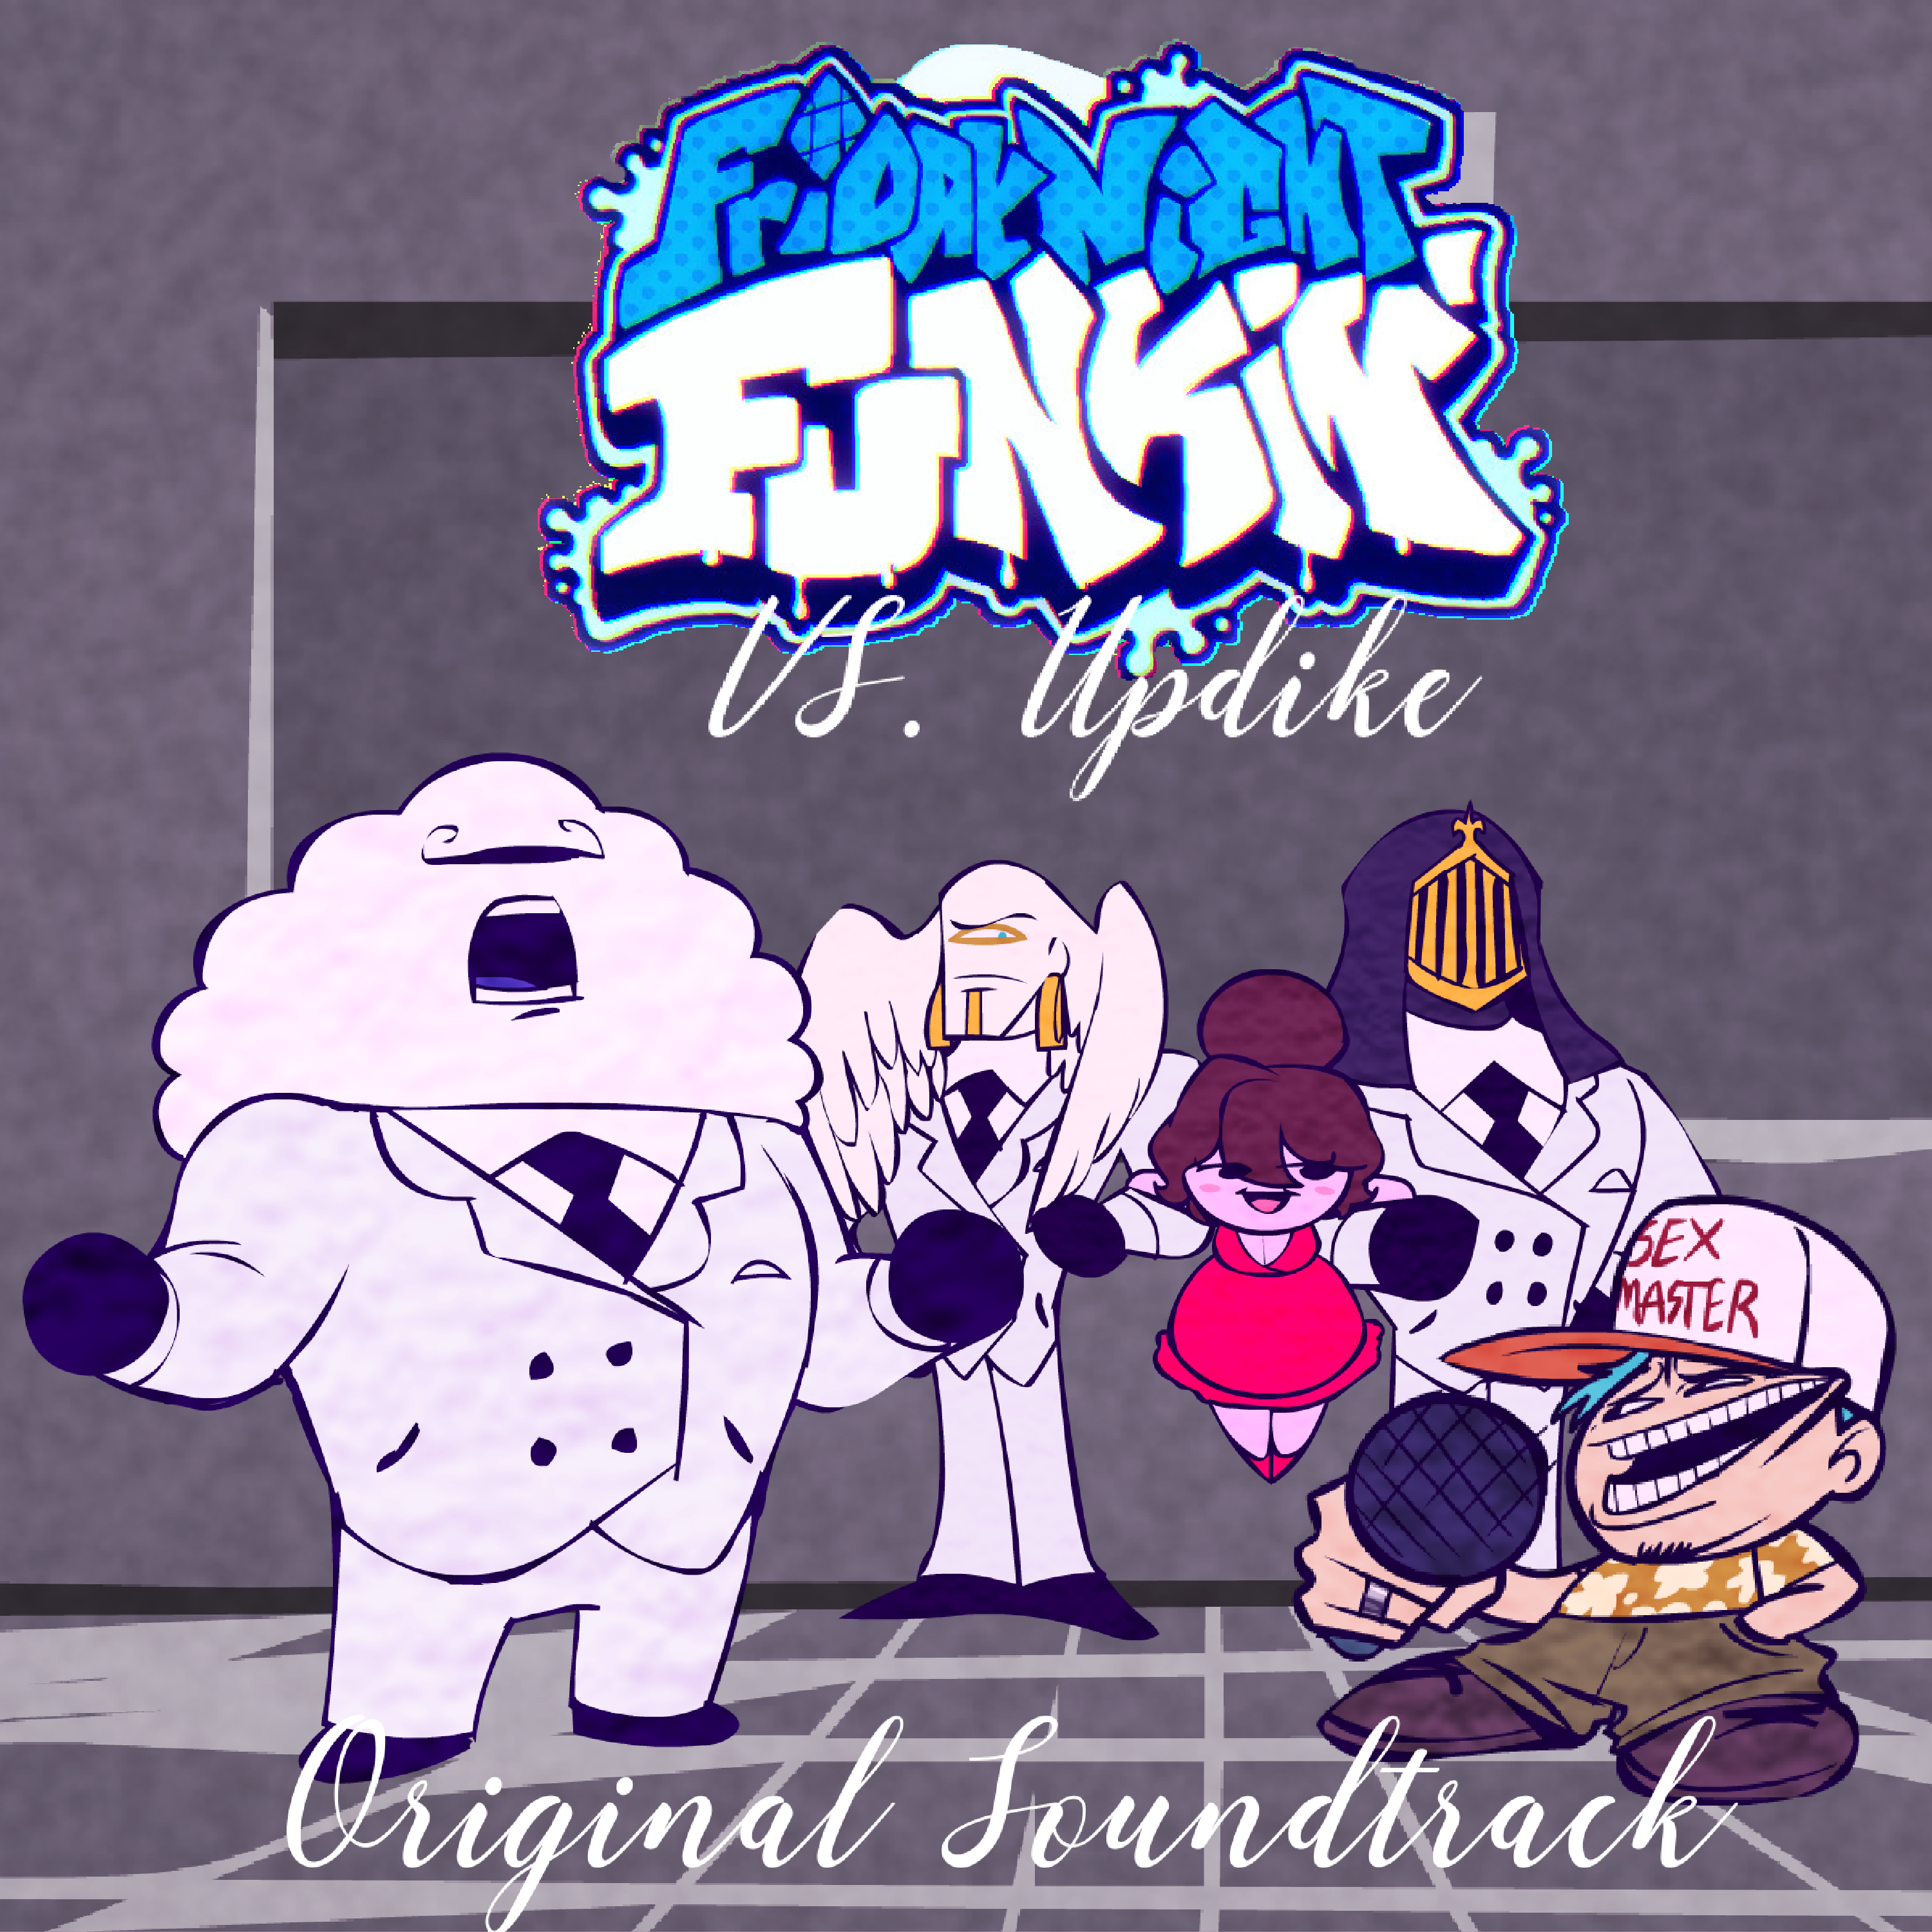 Friday Night Funkin' HD OST (PC, Mac) (Mod) (Windows, MacOS) (gamerip)  (2021) MP3 - Download Friday Night Funkin' HD OST (PC, Mac) (Mod) (Windows,  MacOS) (gamerip) (2021) Soundtracks for FREE!